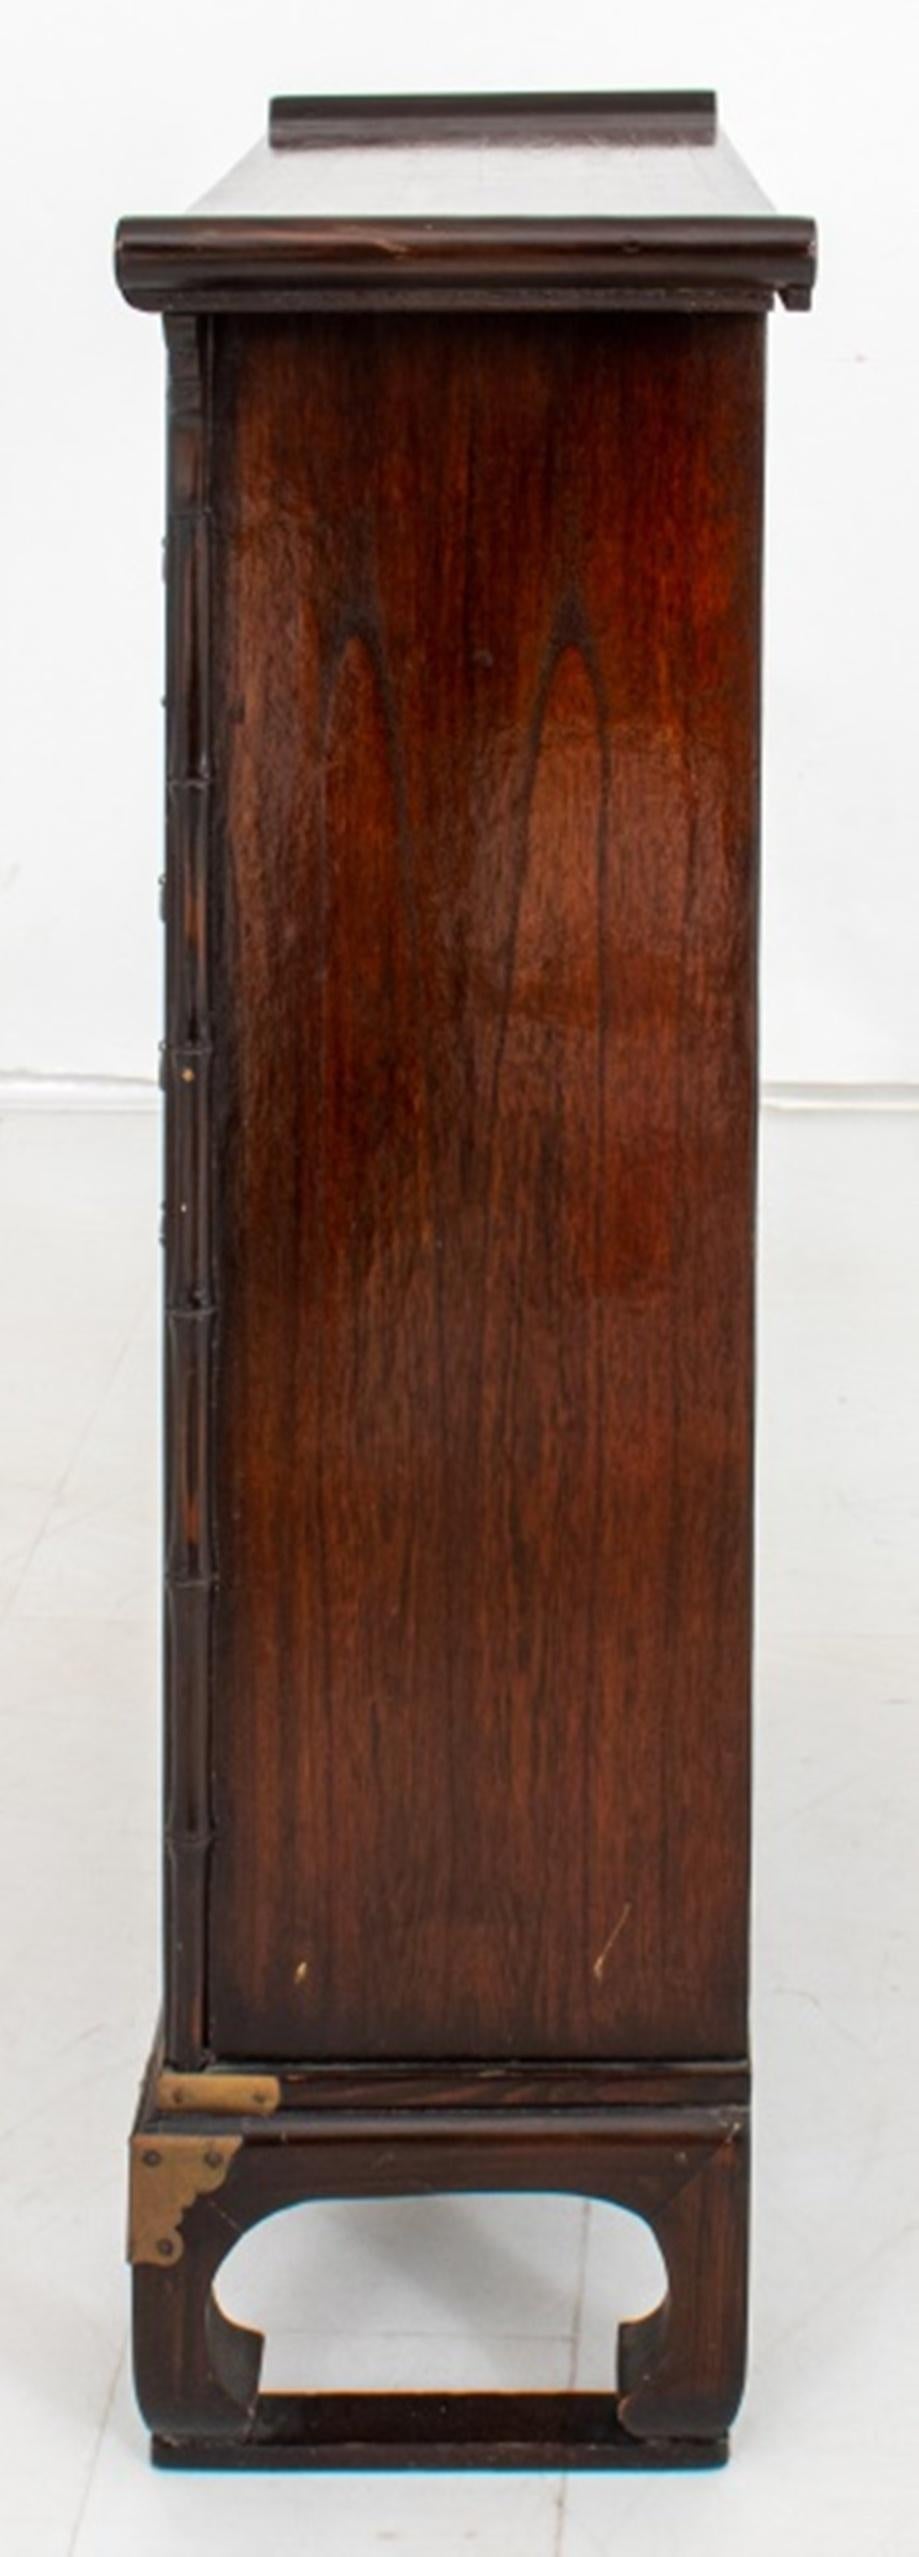 Wood Korean Apothecary Medicinal Cabinet, 19th C